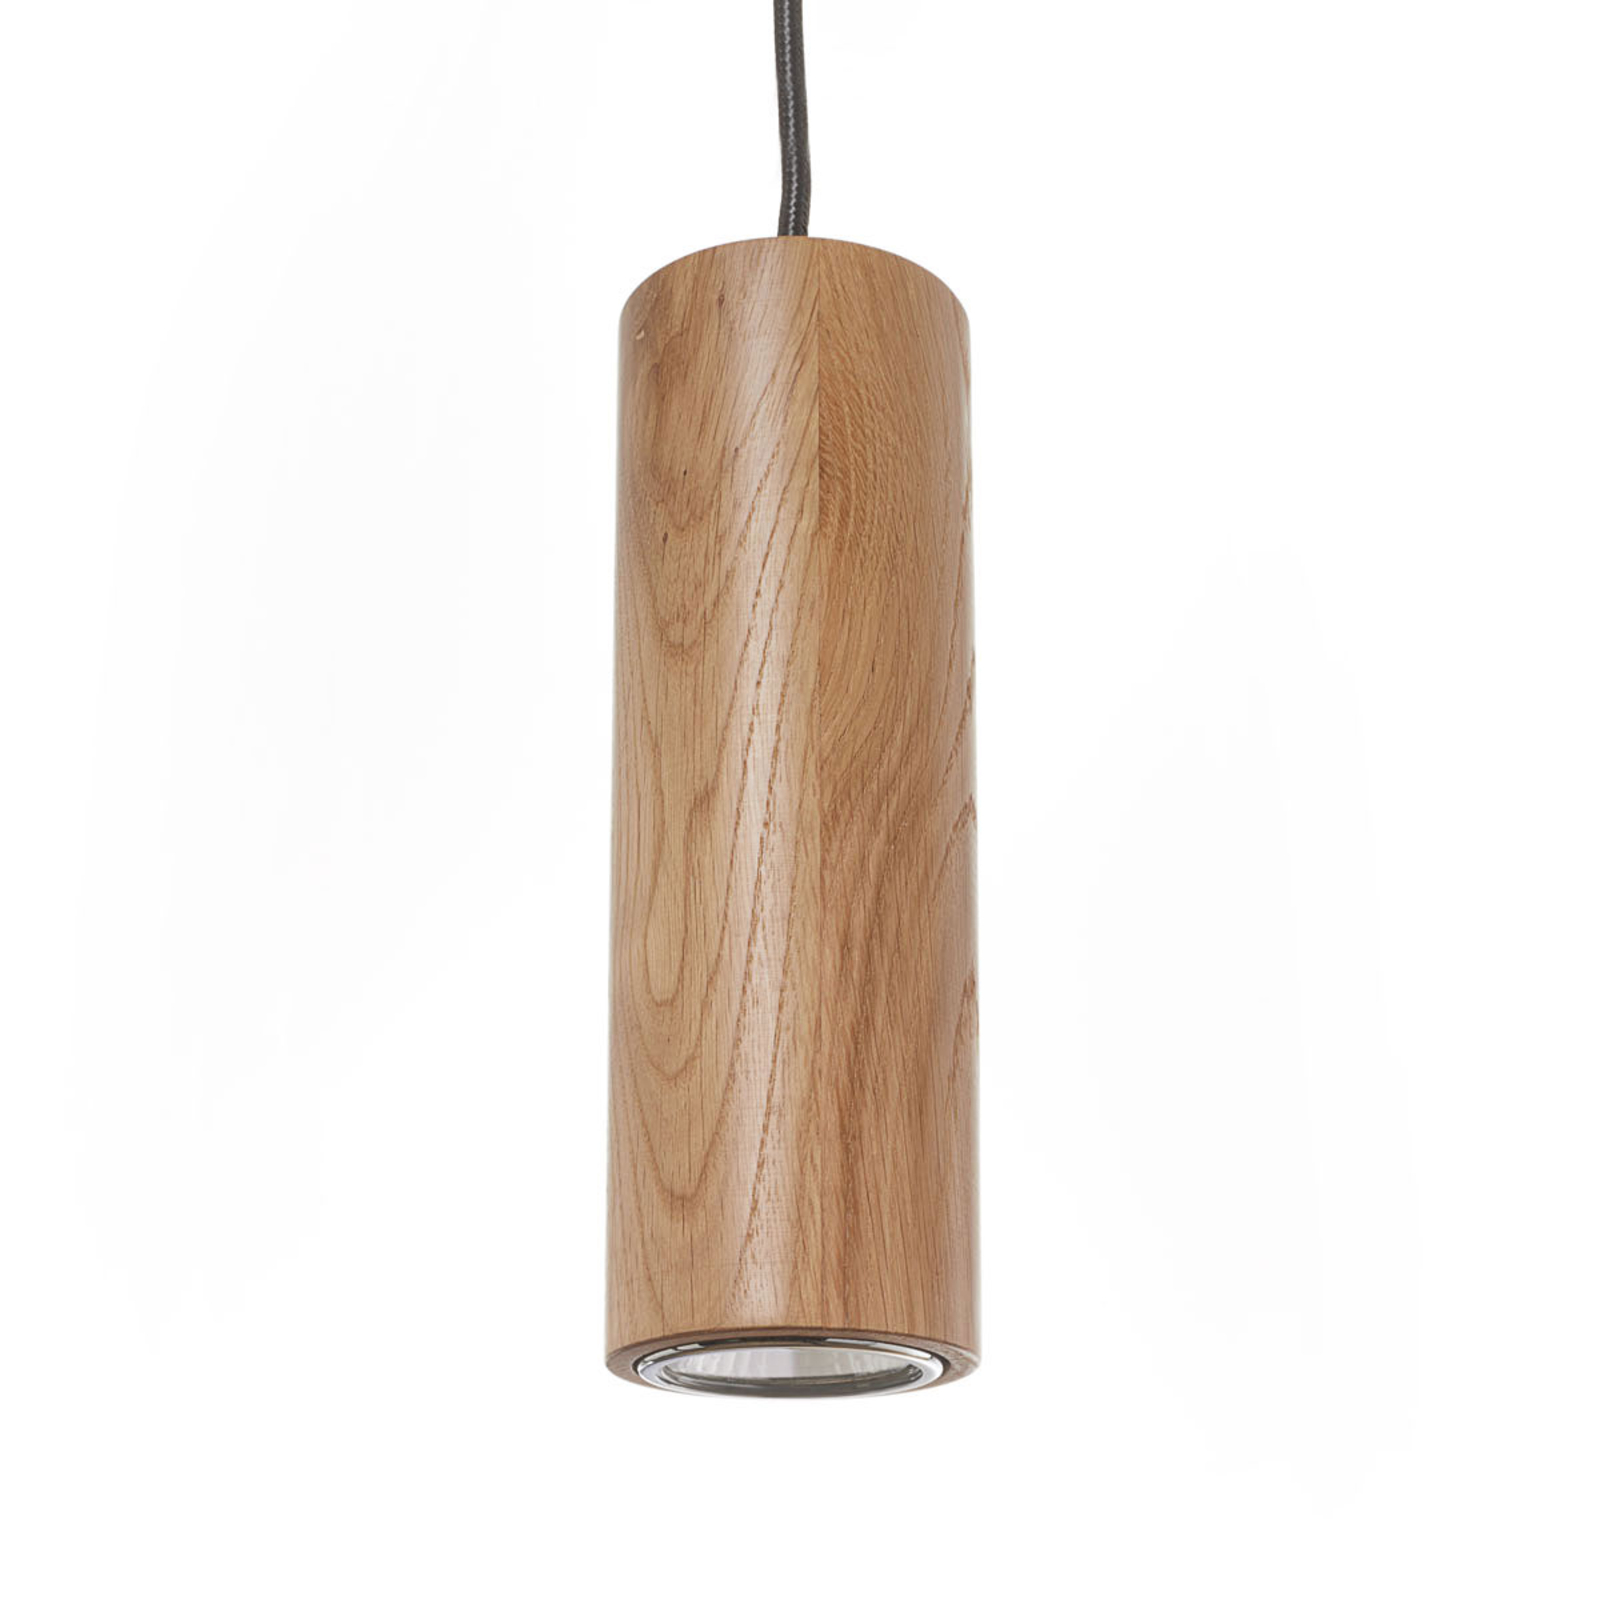 One-bulb LED LED pendant light Pipe of oak wood